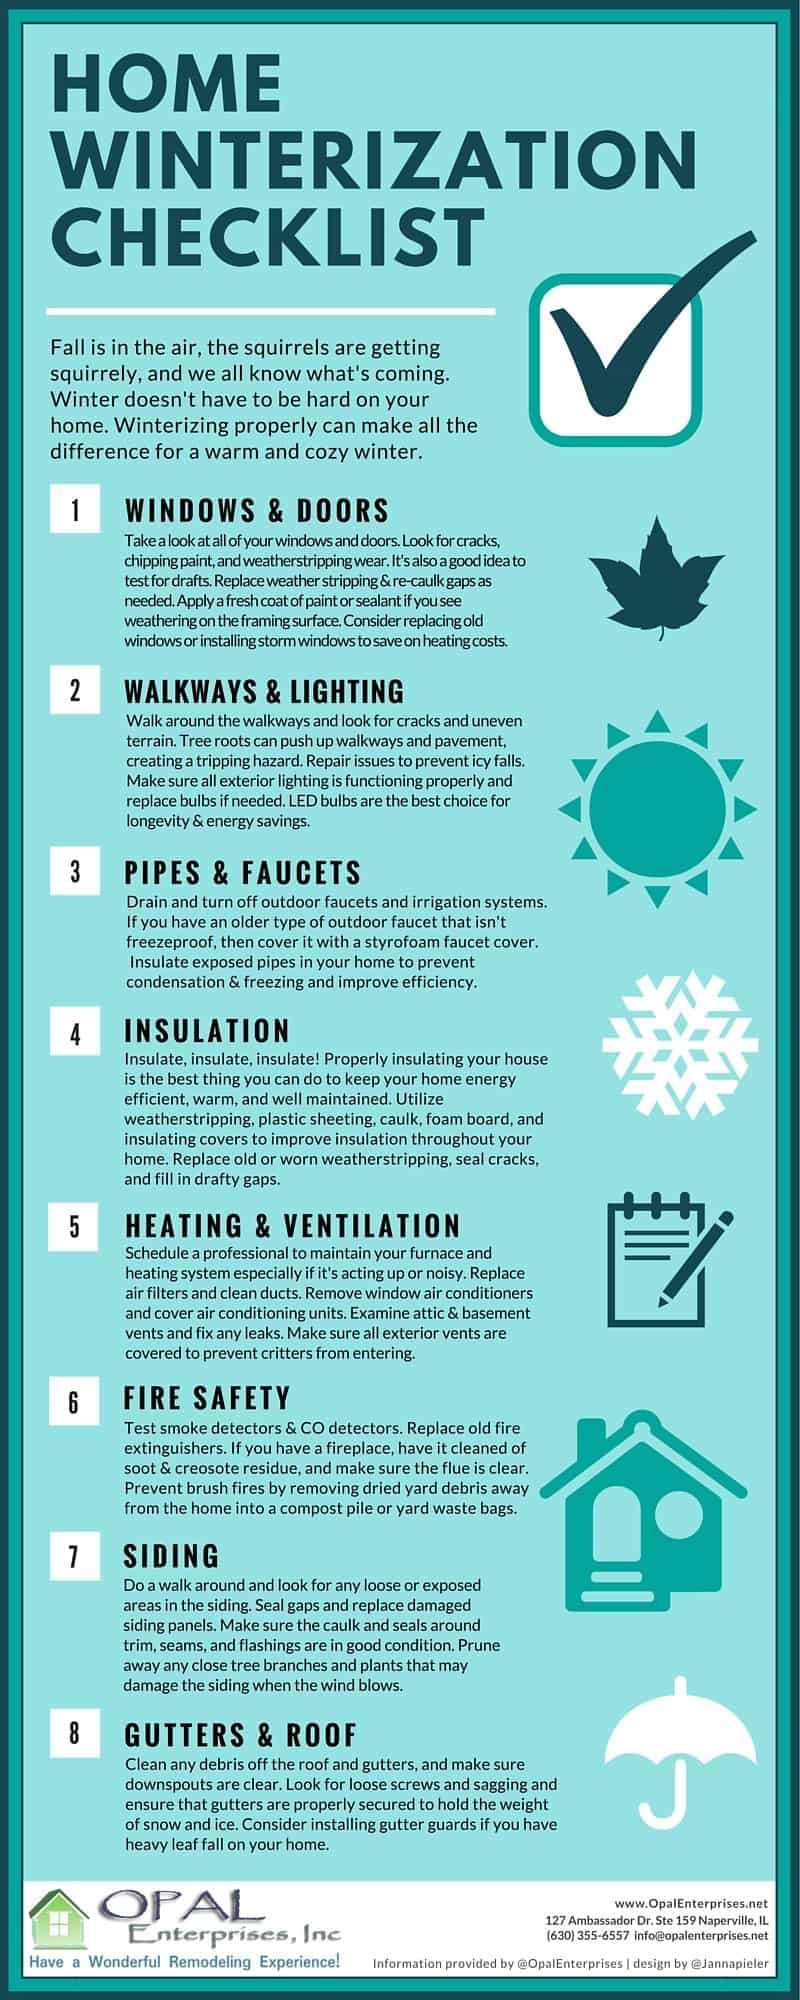 Home Winterization Checklist Infographic by Opal Enterprises